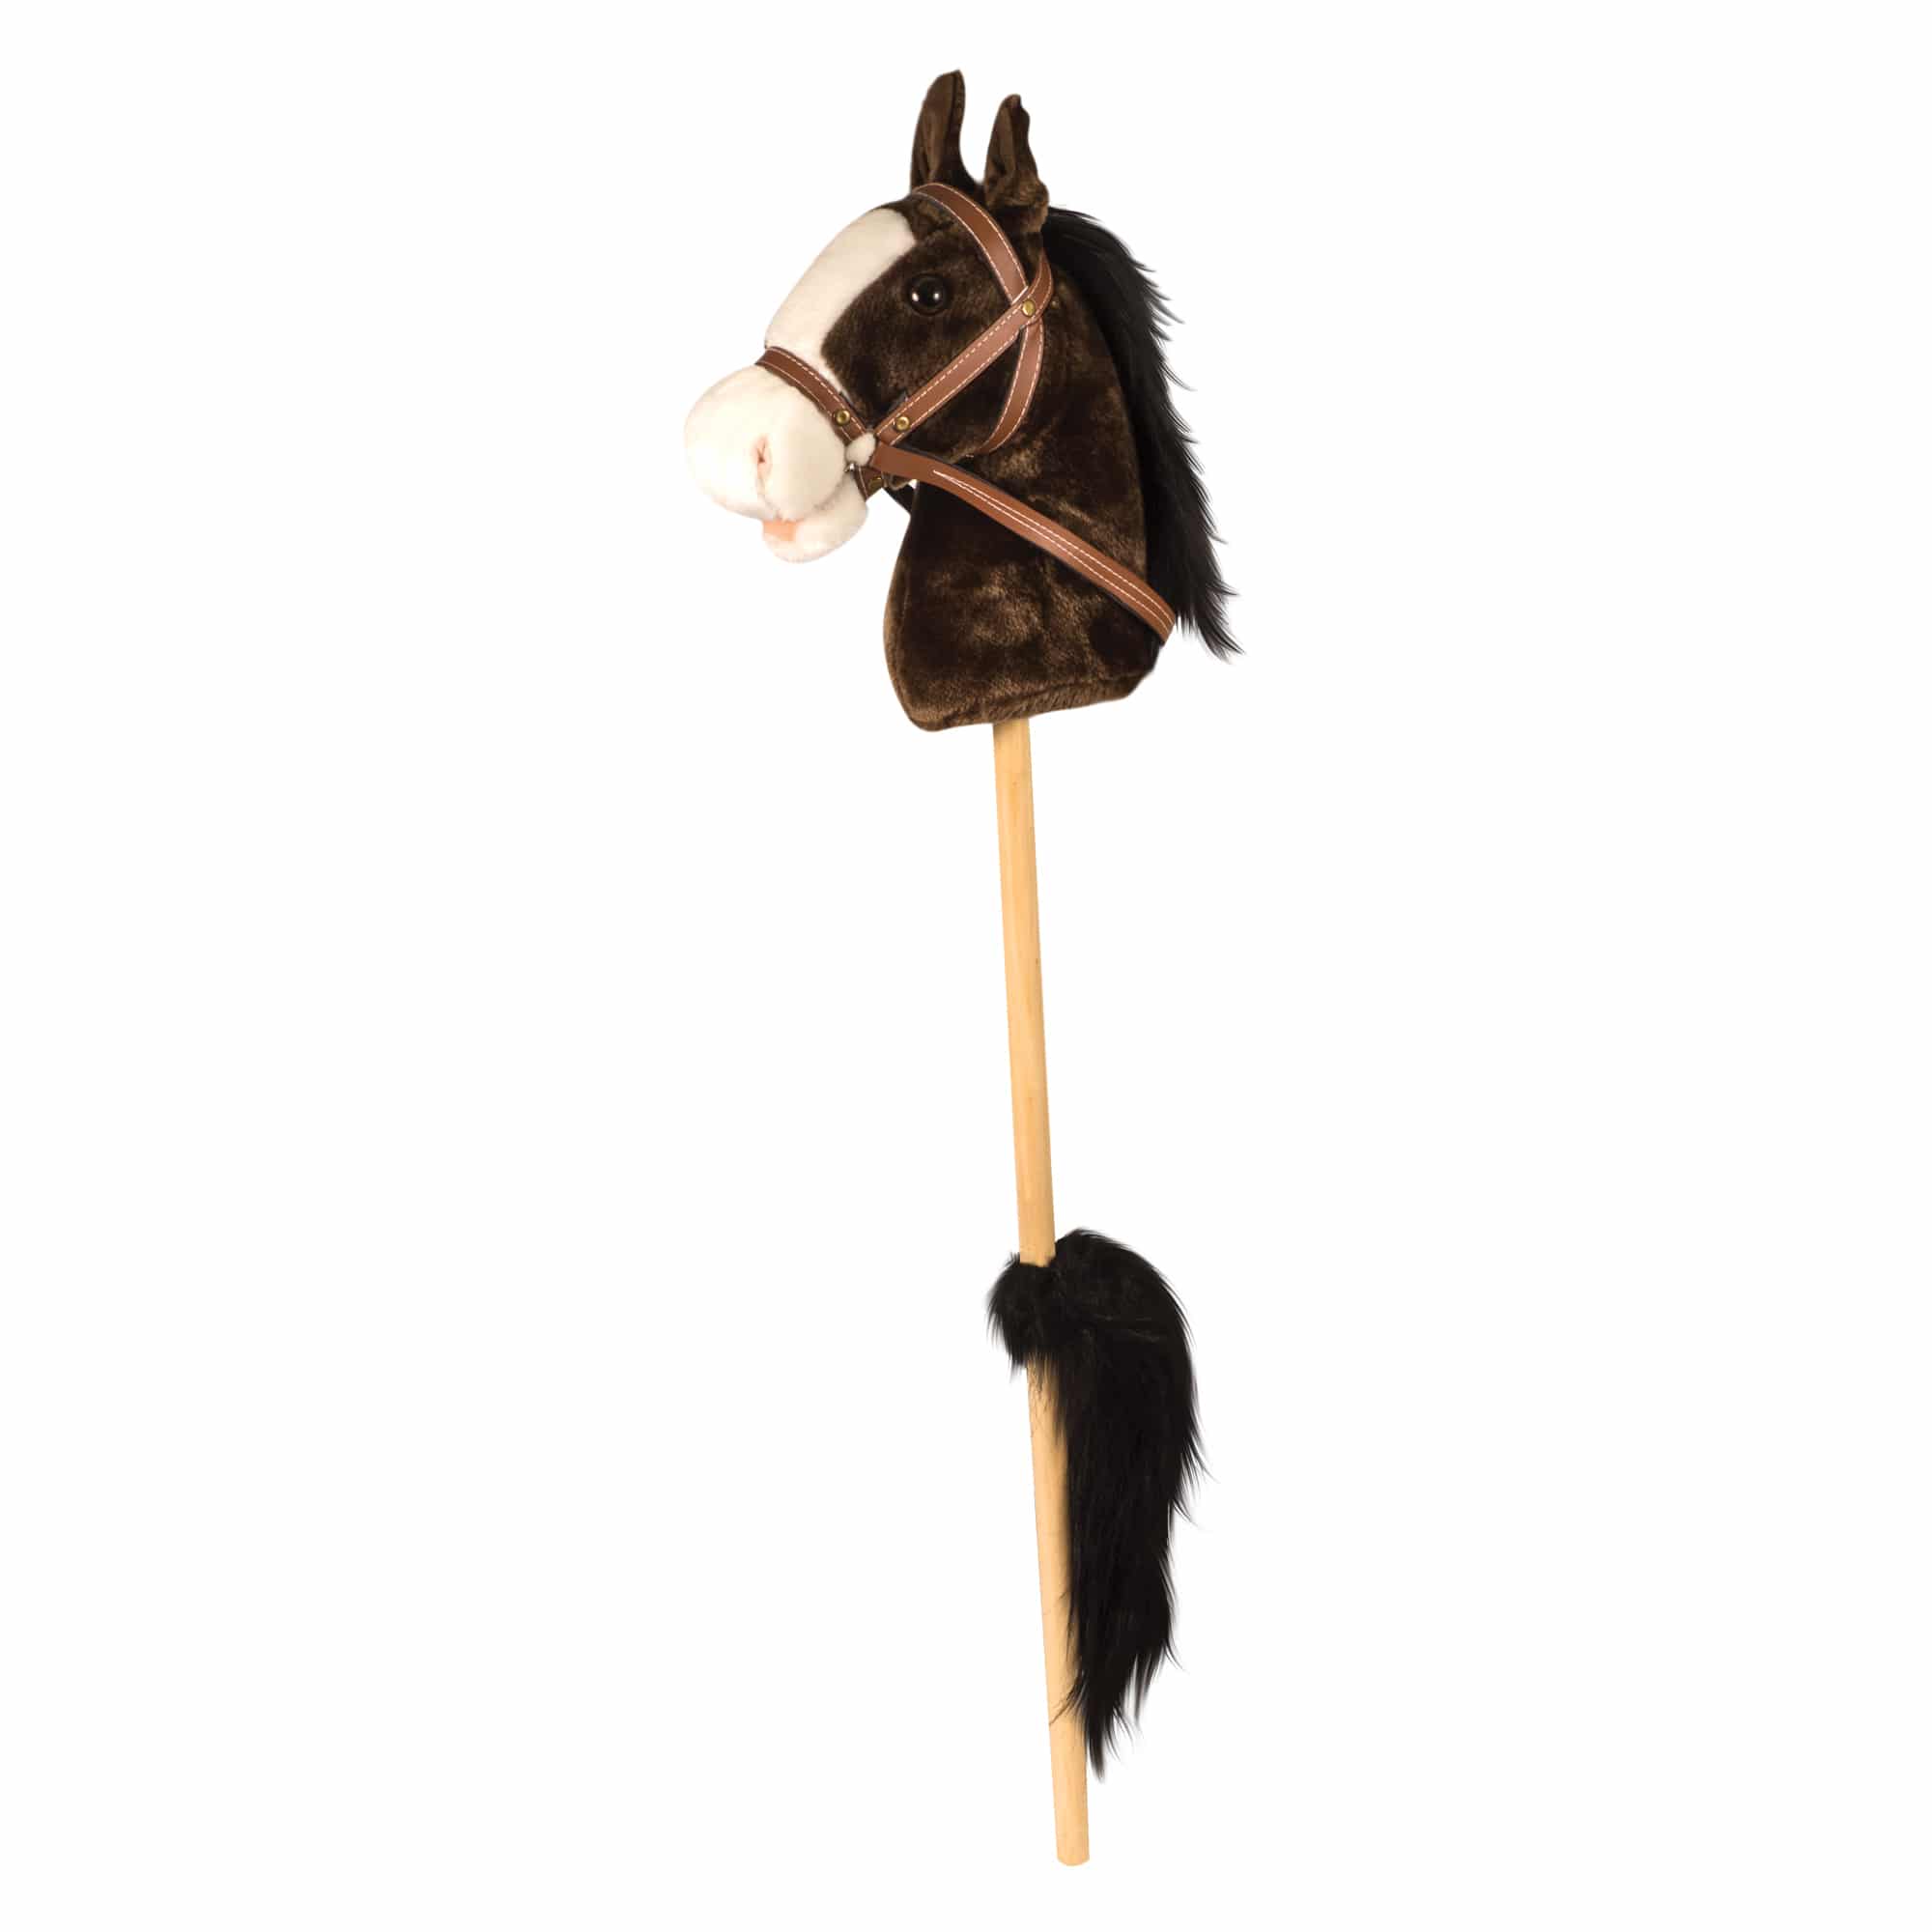 Dapple Gray Hobby horse Stick horse for children Horse toy on stick